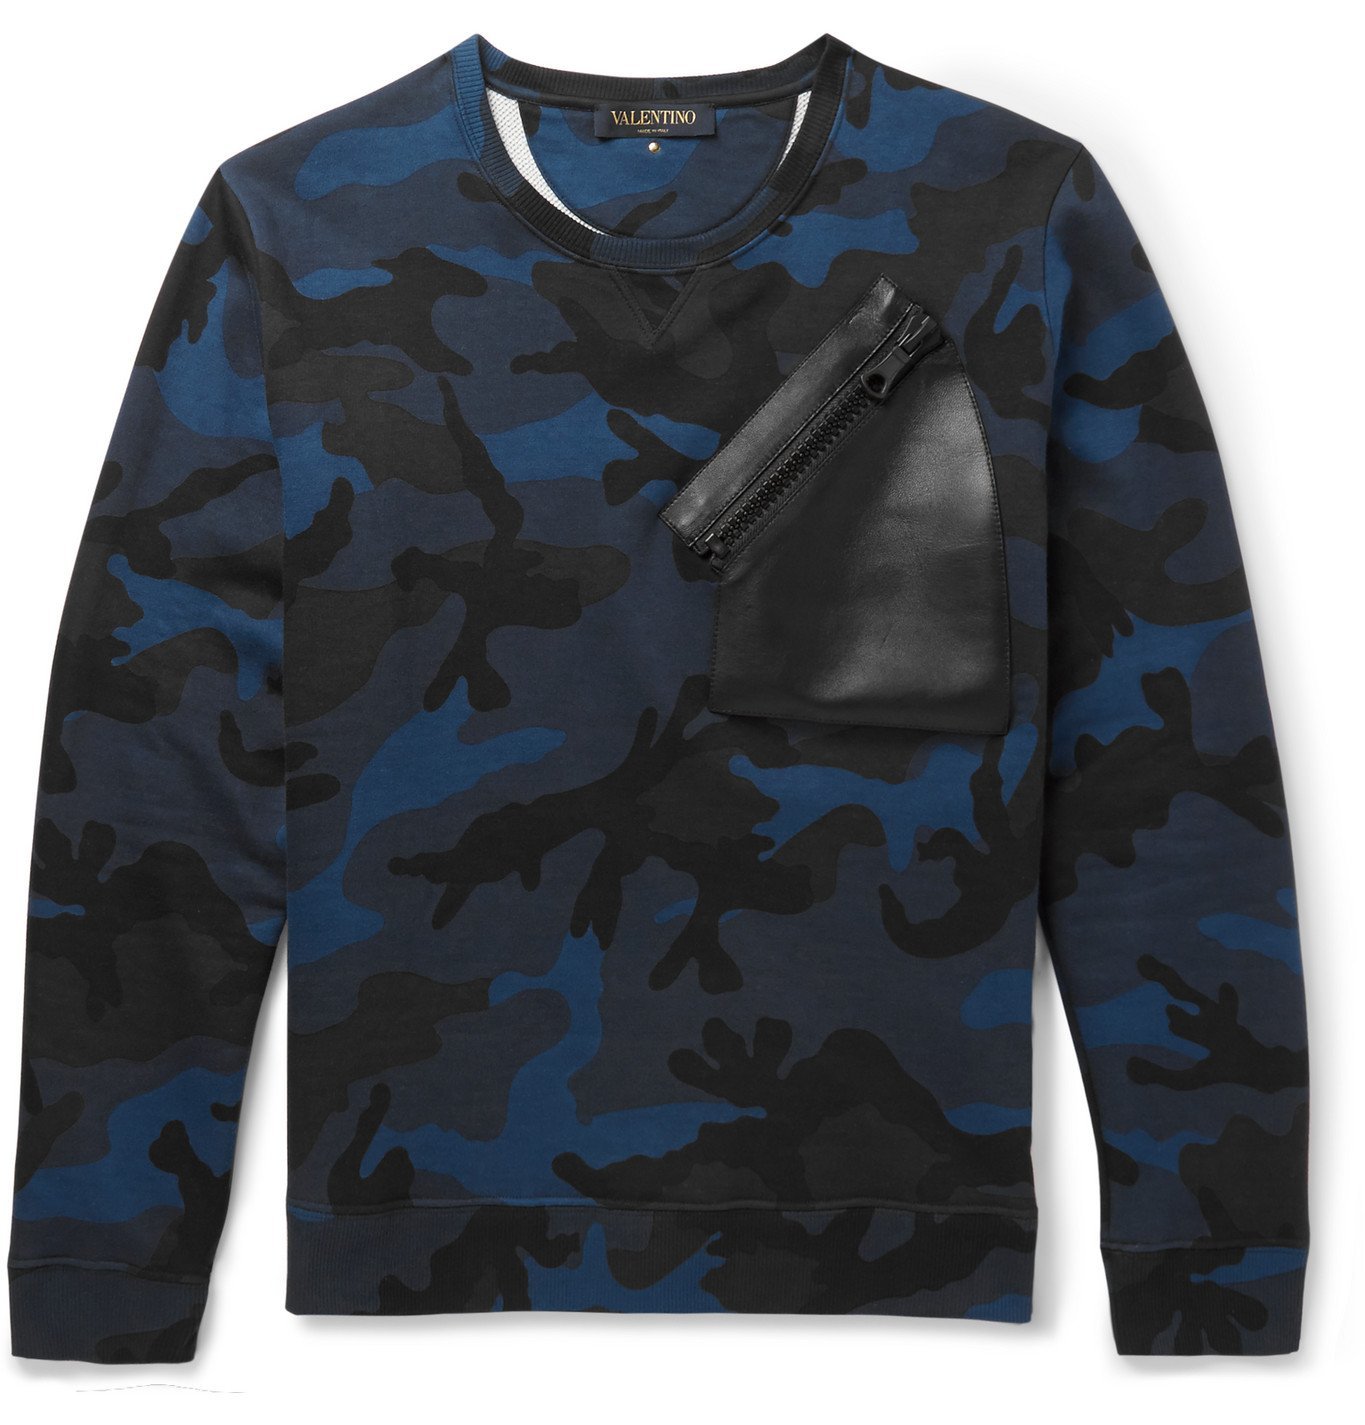 VALENTINO - Leather-Trimmed Camo Cotton-Blend Jersey Sweatshirt 